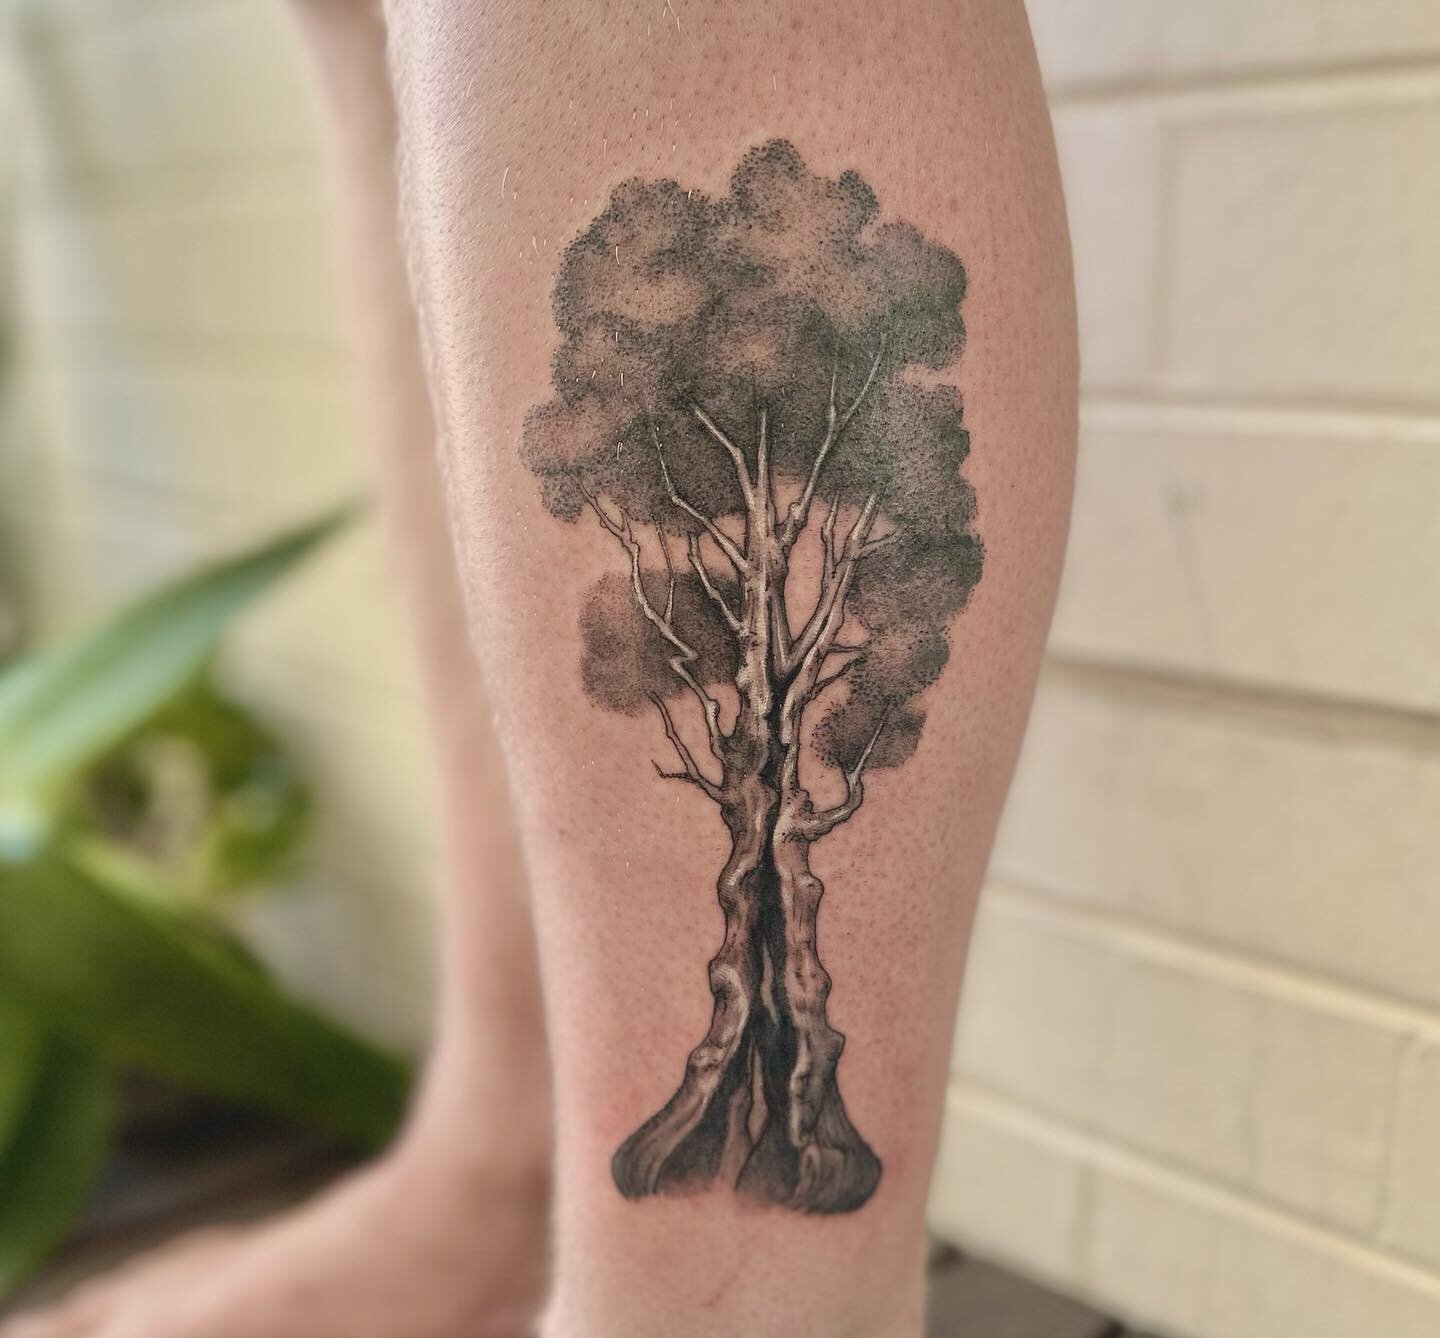 Tingle tree for Glenn 🙏🌳! 
made at @wa.ink.tattoo 

.
.
.
.
#perthtattoo#perthtattooartists#perthtattooartist#finelinetattooperth#flowertattooperth#tingletree